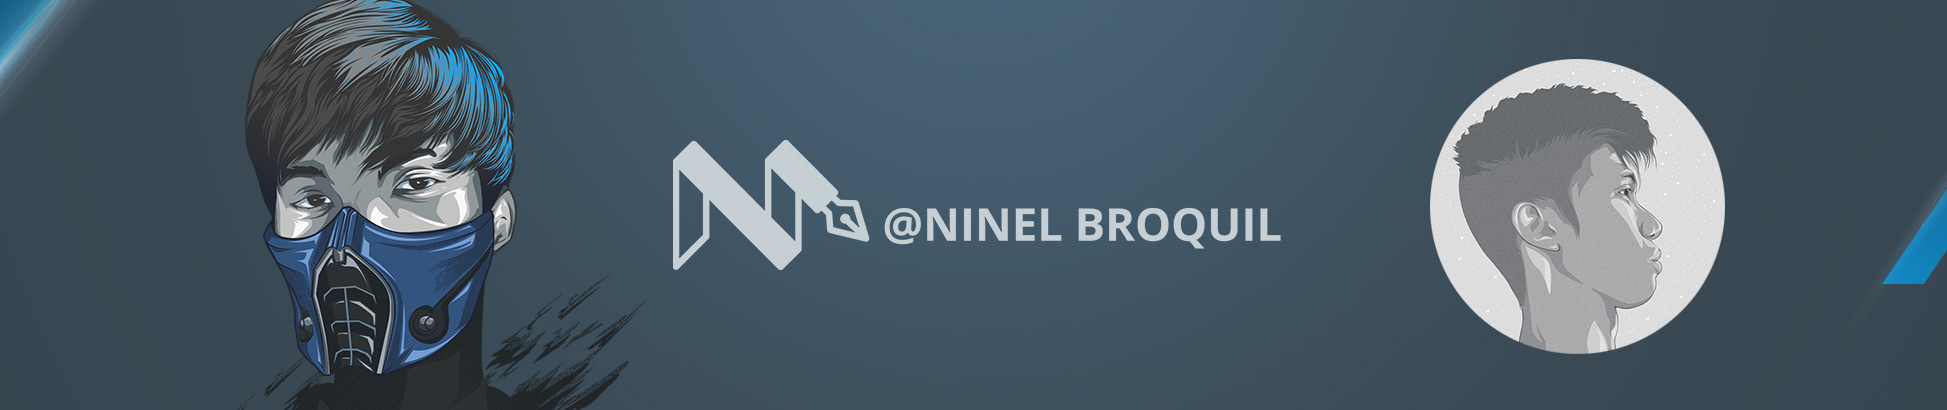 Баннер профиля Ninel Mikhael Broquil